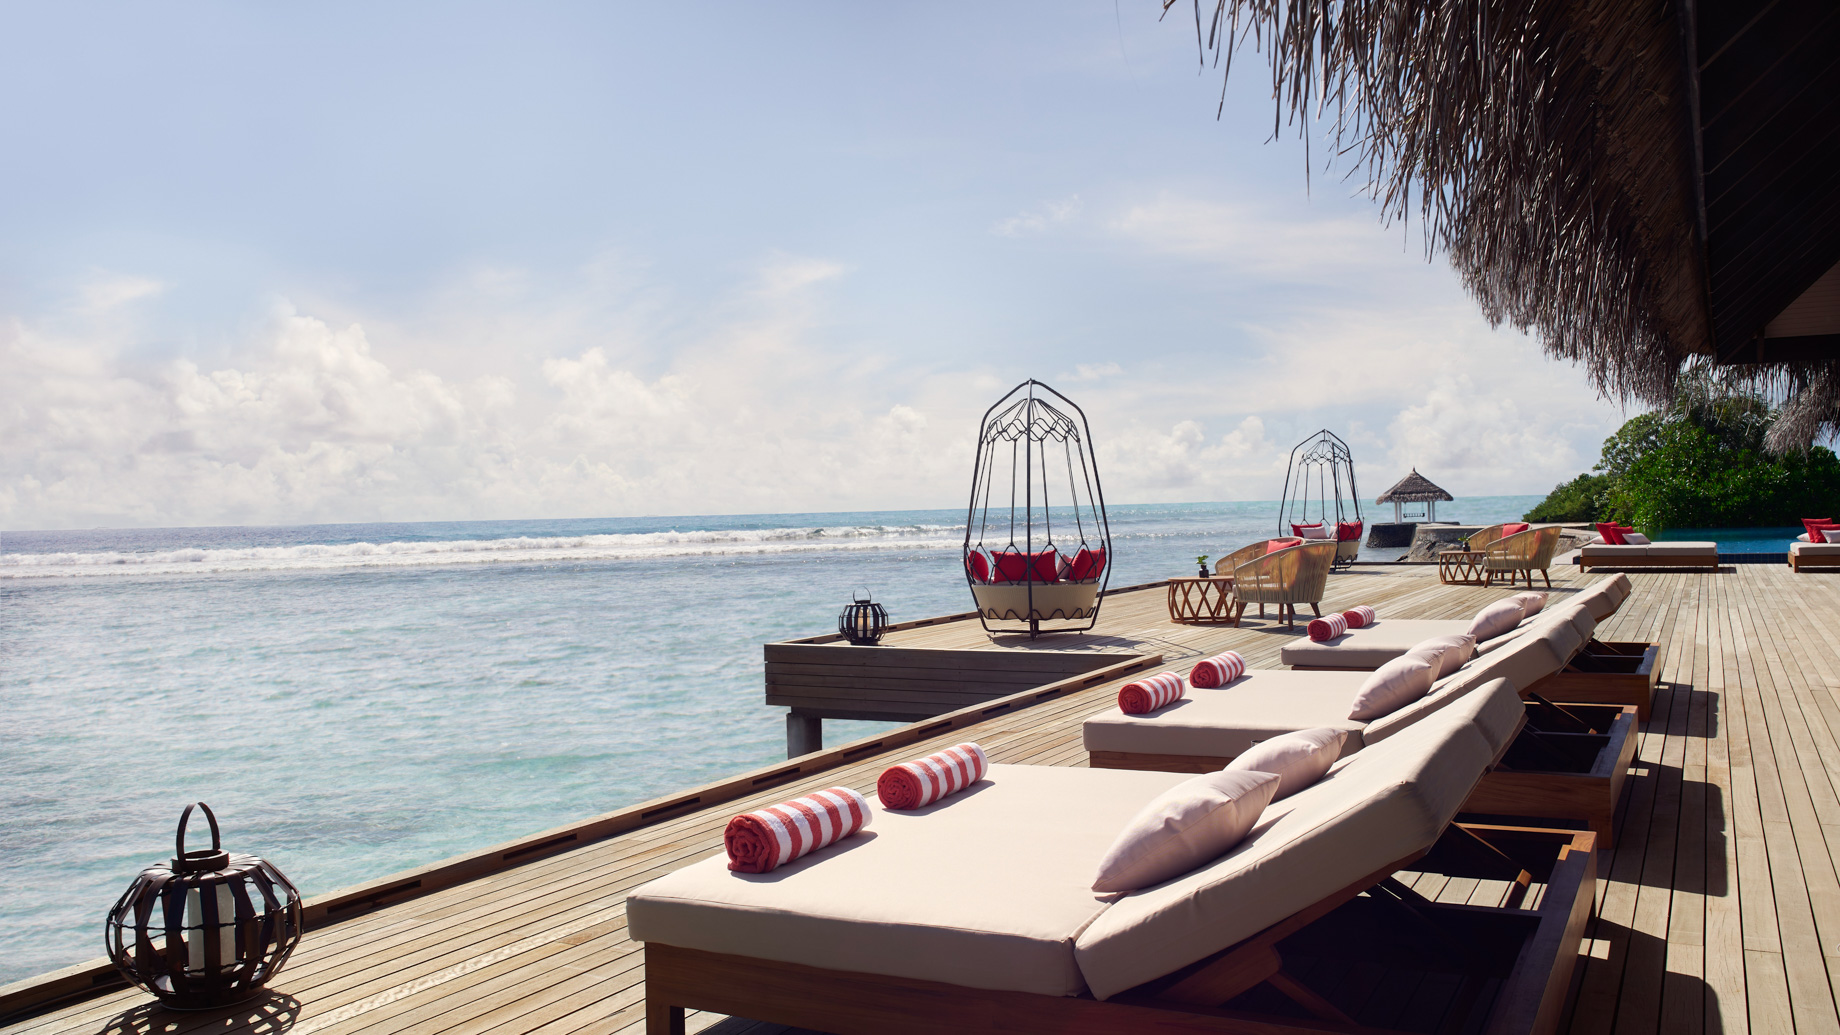 Anantara Veli Maldives Resort - South Male Atoll, Maldives - Resort Infinity Pool Deck